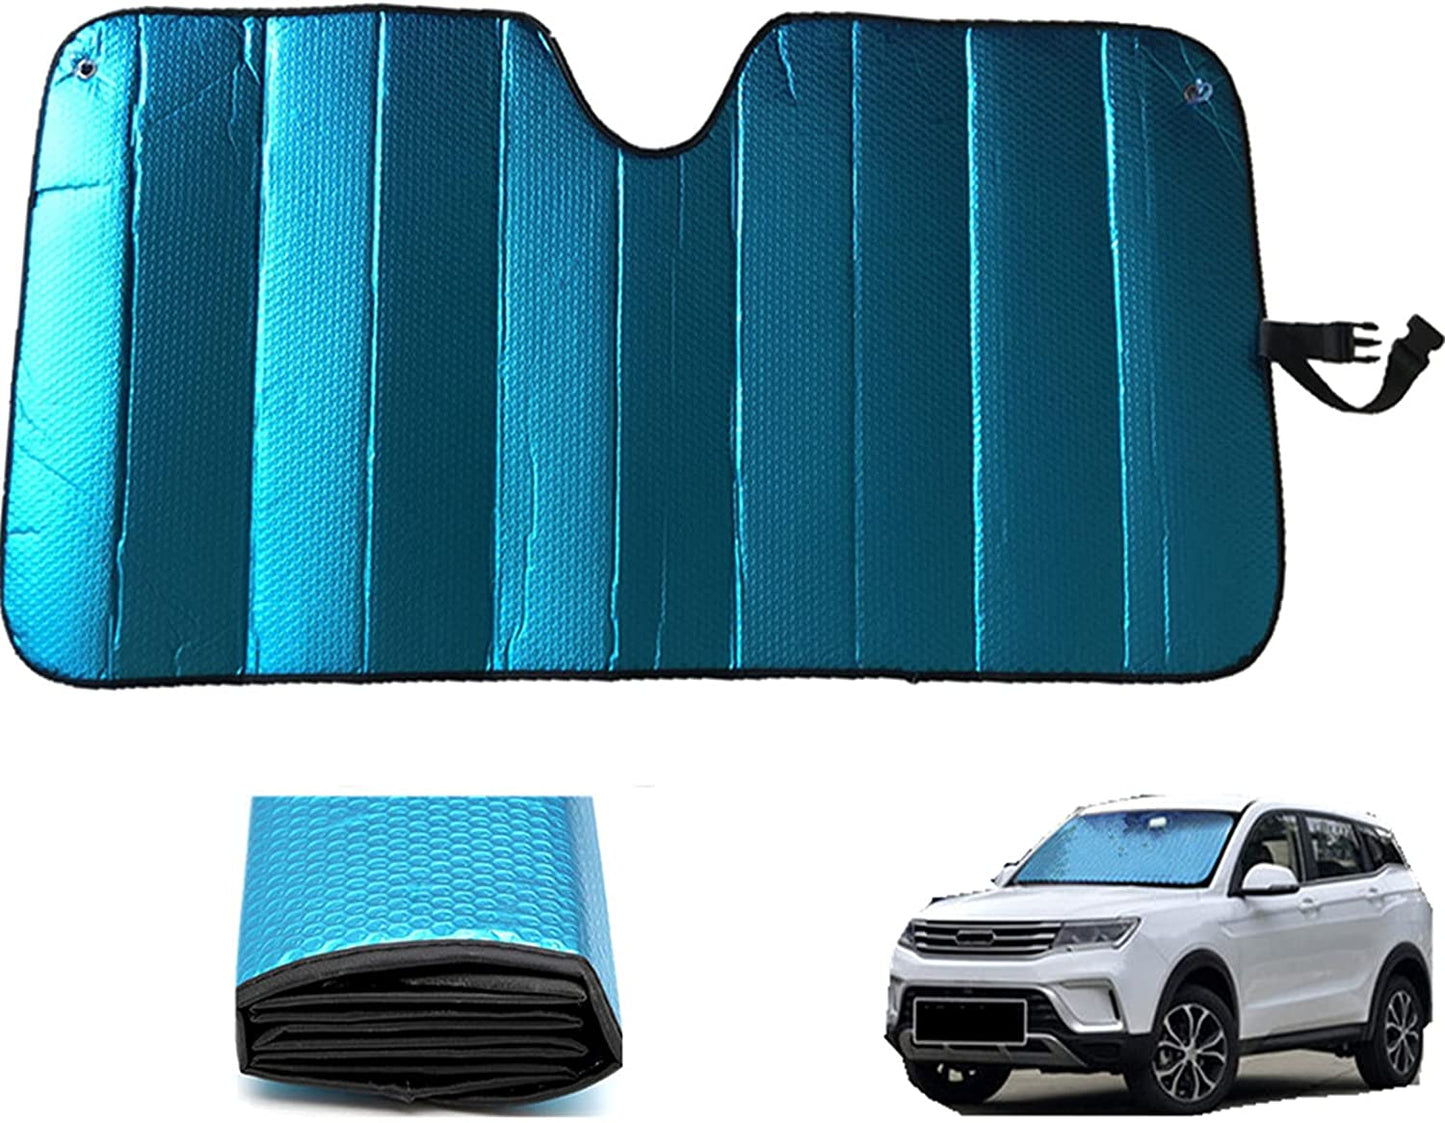 Car Windshield Sunshade-Thicken 5-Layer Bubble Block Heat and Sun UV Rays,Front Windshield Sun Shade,Sun Visor for Car- Keeps Your Vehicle Cool - 58 x 27.5 Inch (Blue)